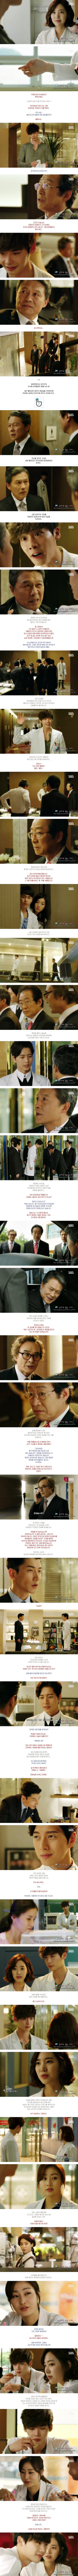 episode 8 captures for the Korean drama 'Doctor Stranger'